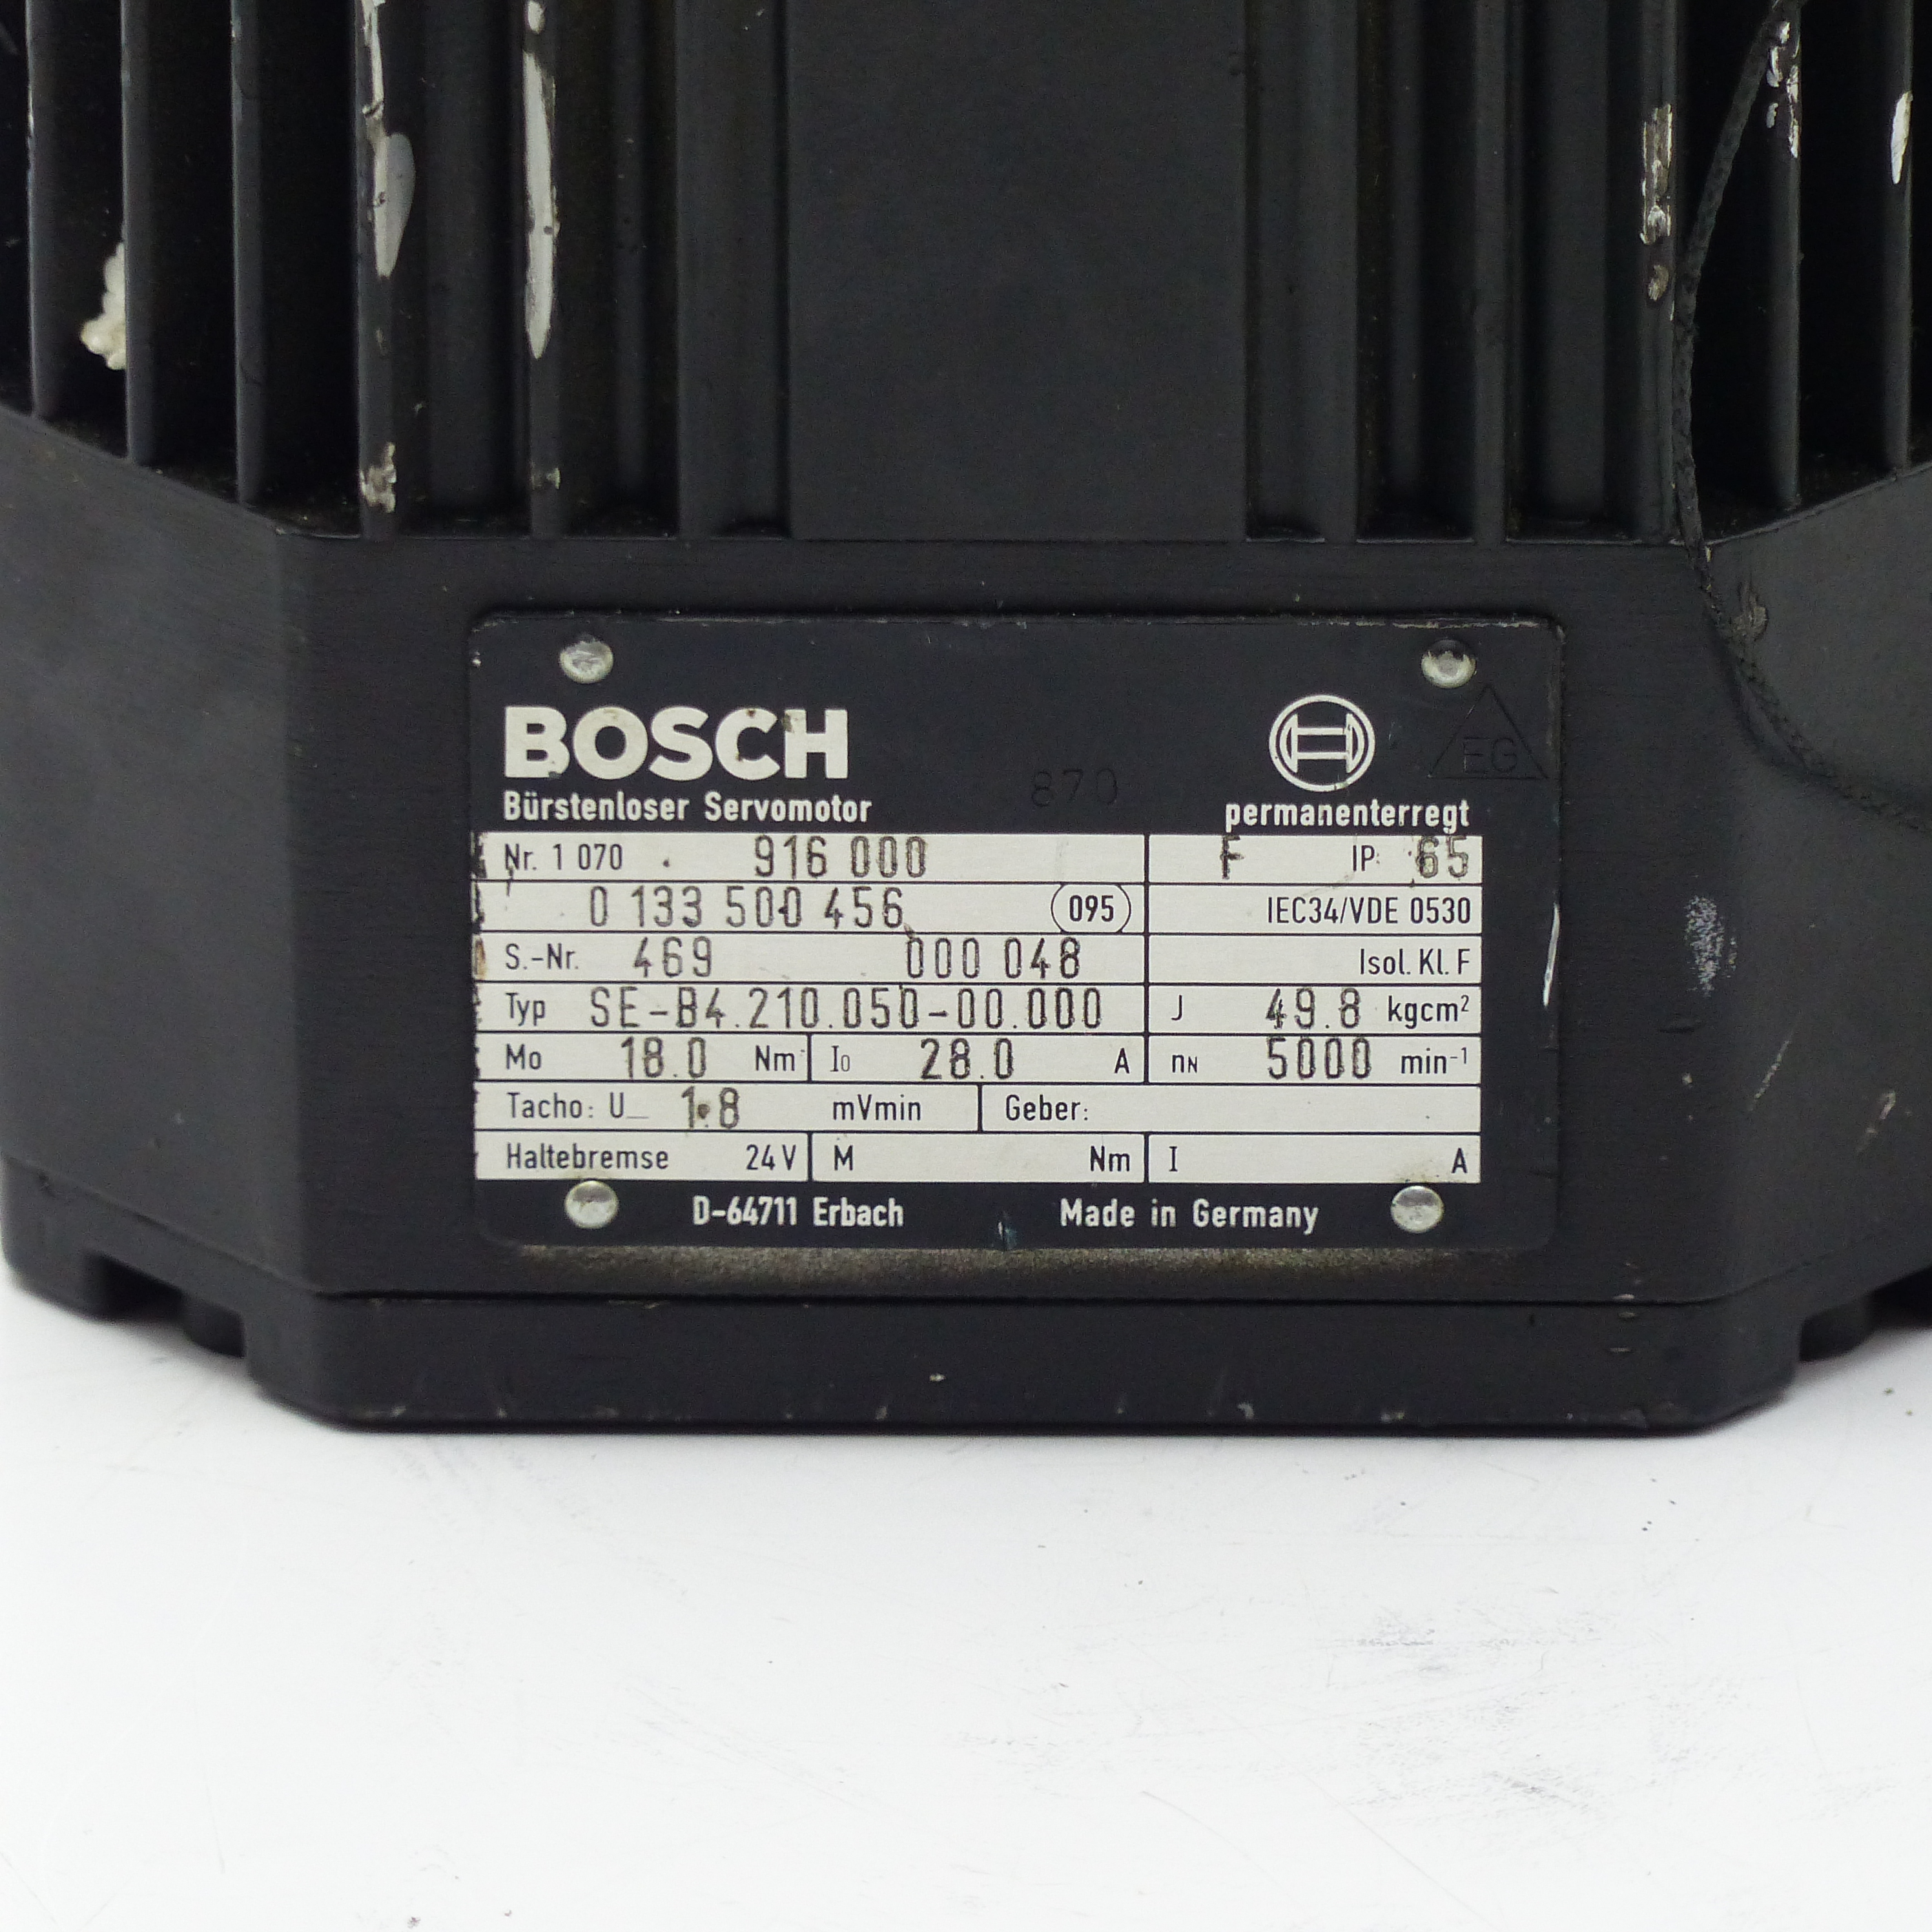 Brushless servo motor SE-B4.210.050-00.000 